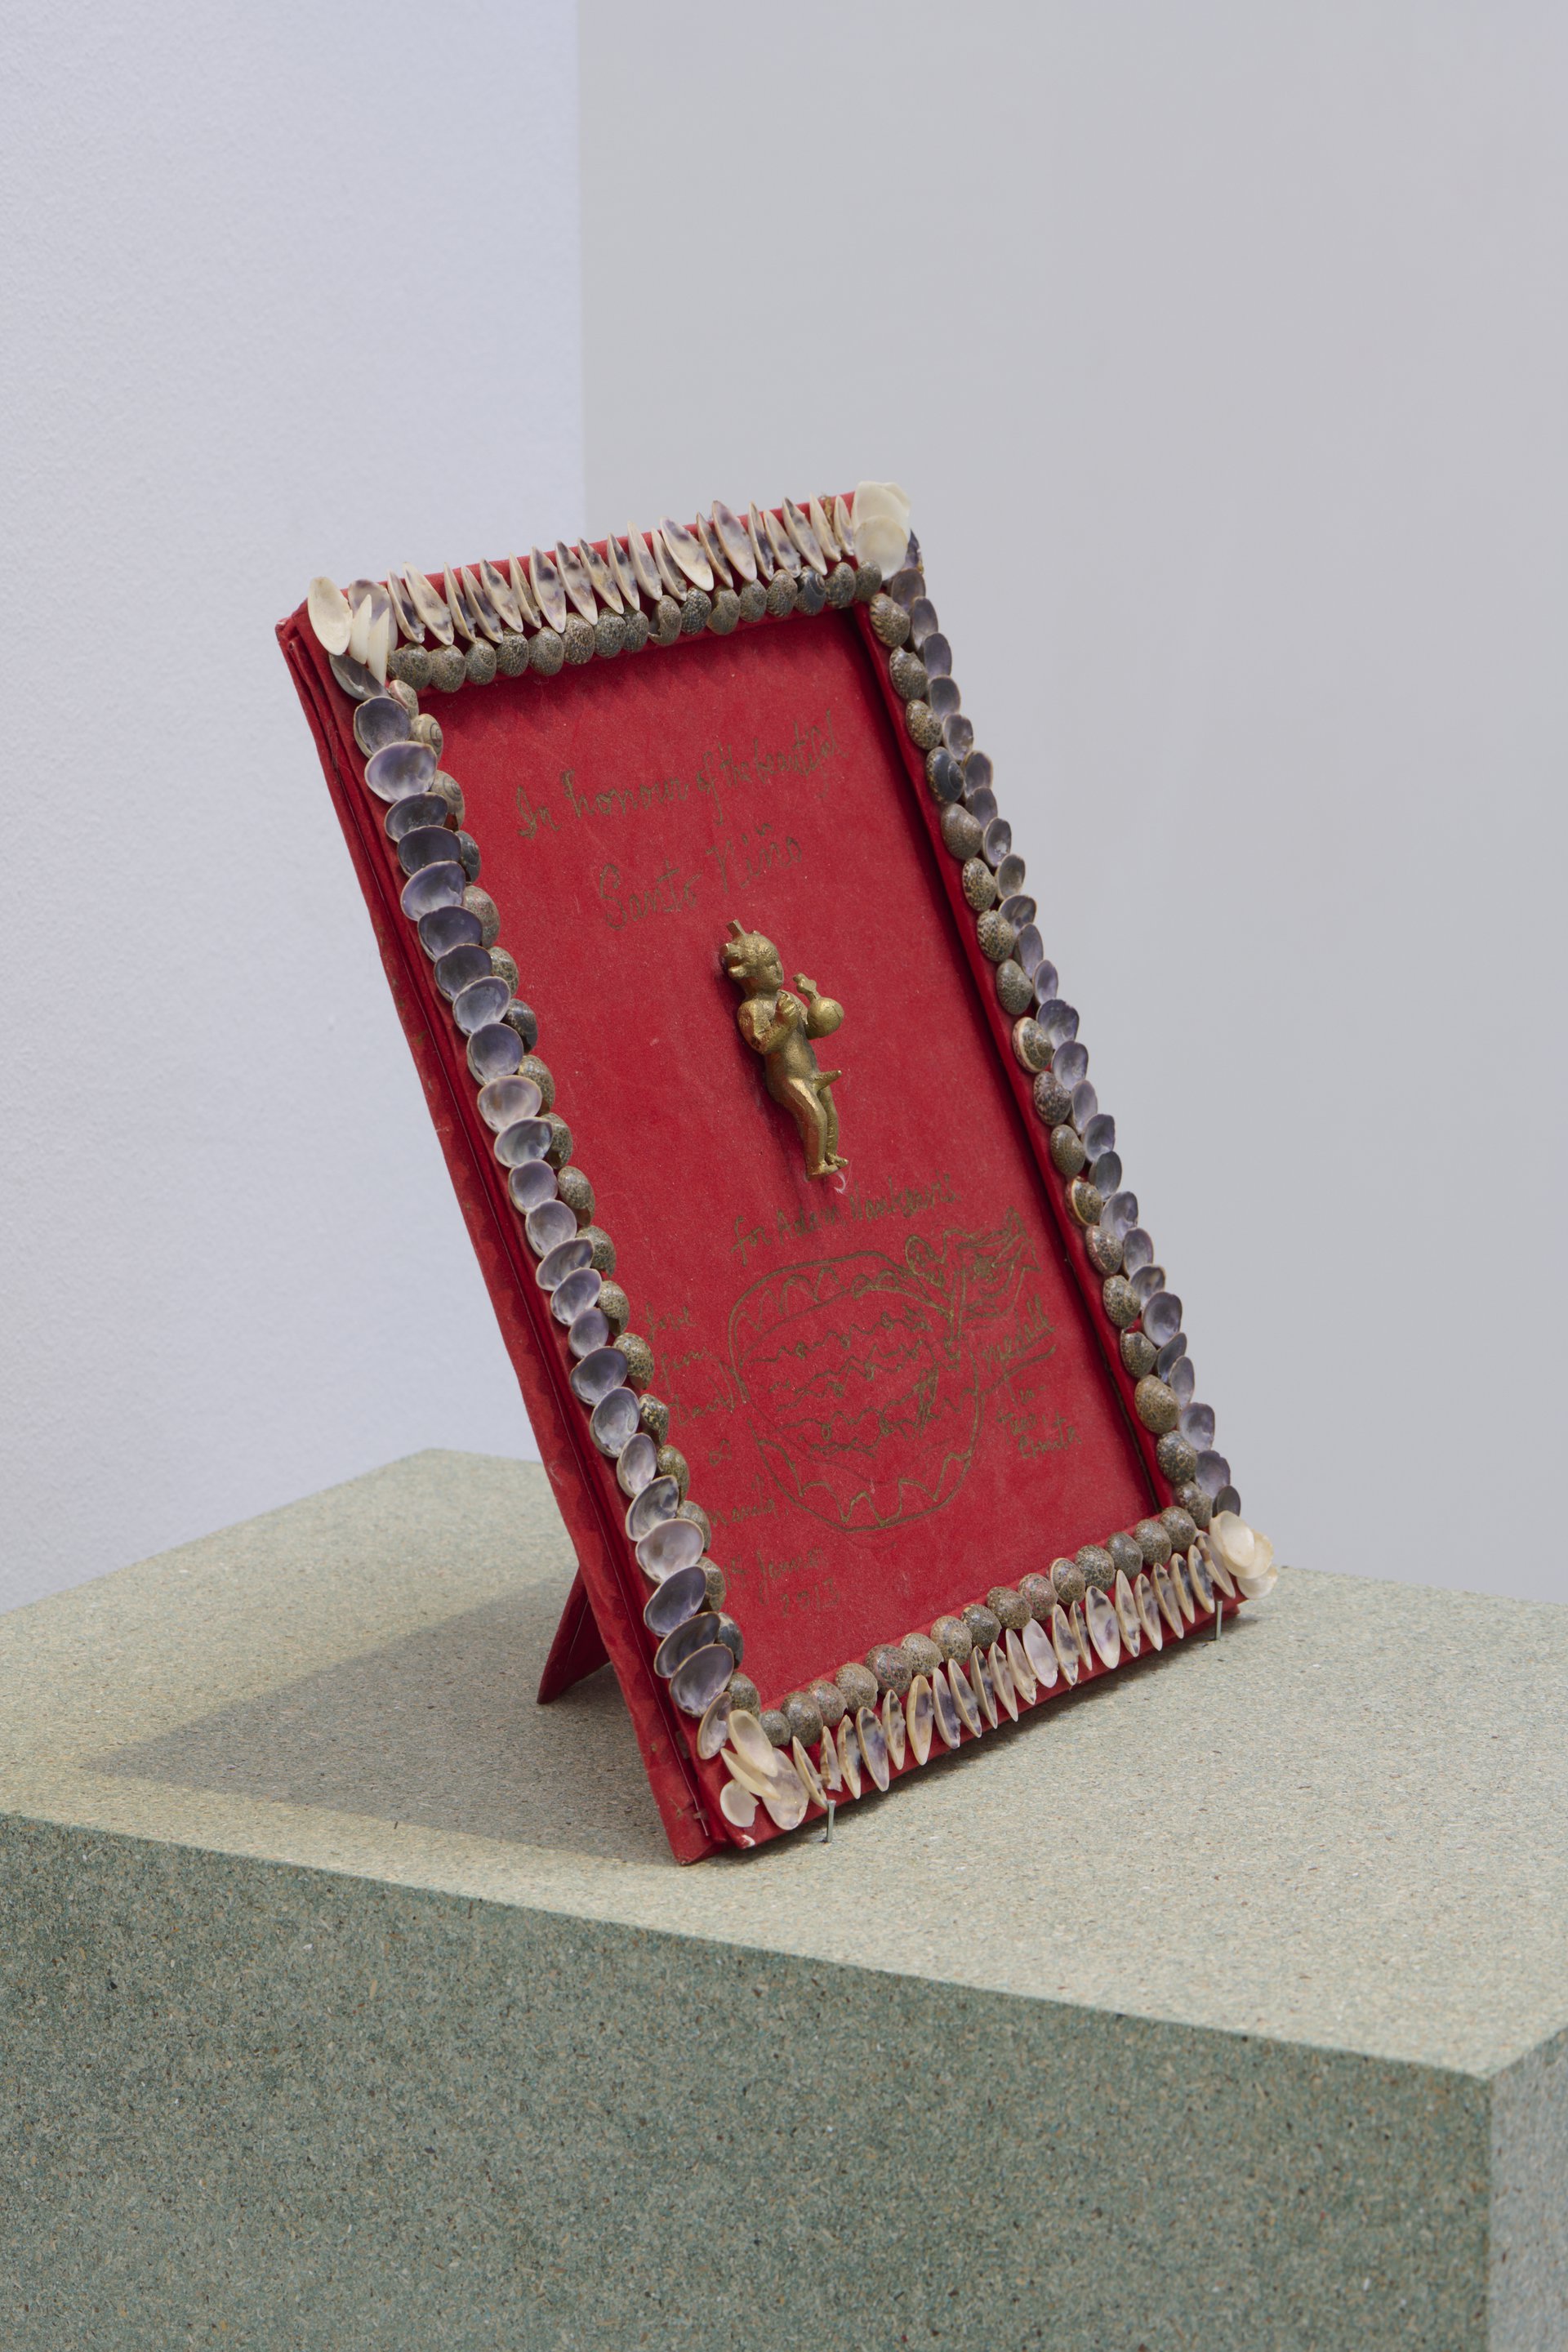 David Medalla, ‘In honour of the beautiful Santo Niño’ 2013, lacquer pen on readymade picture frame (seashells on felt), 30,0 x 26,4 x 15,7 cm, Bonner Kunstverein, 2021. Photo: Mareike Tocha.